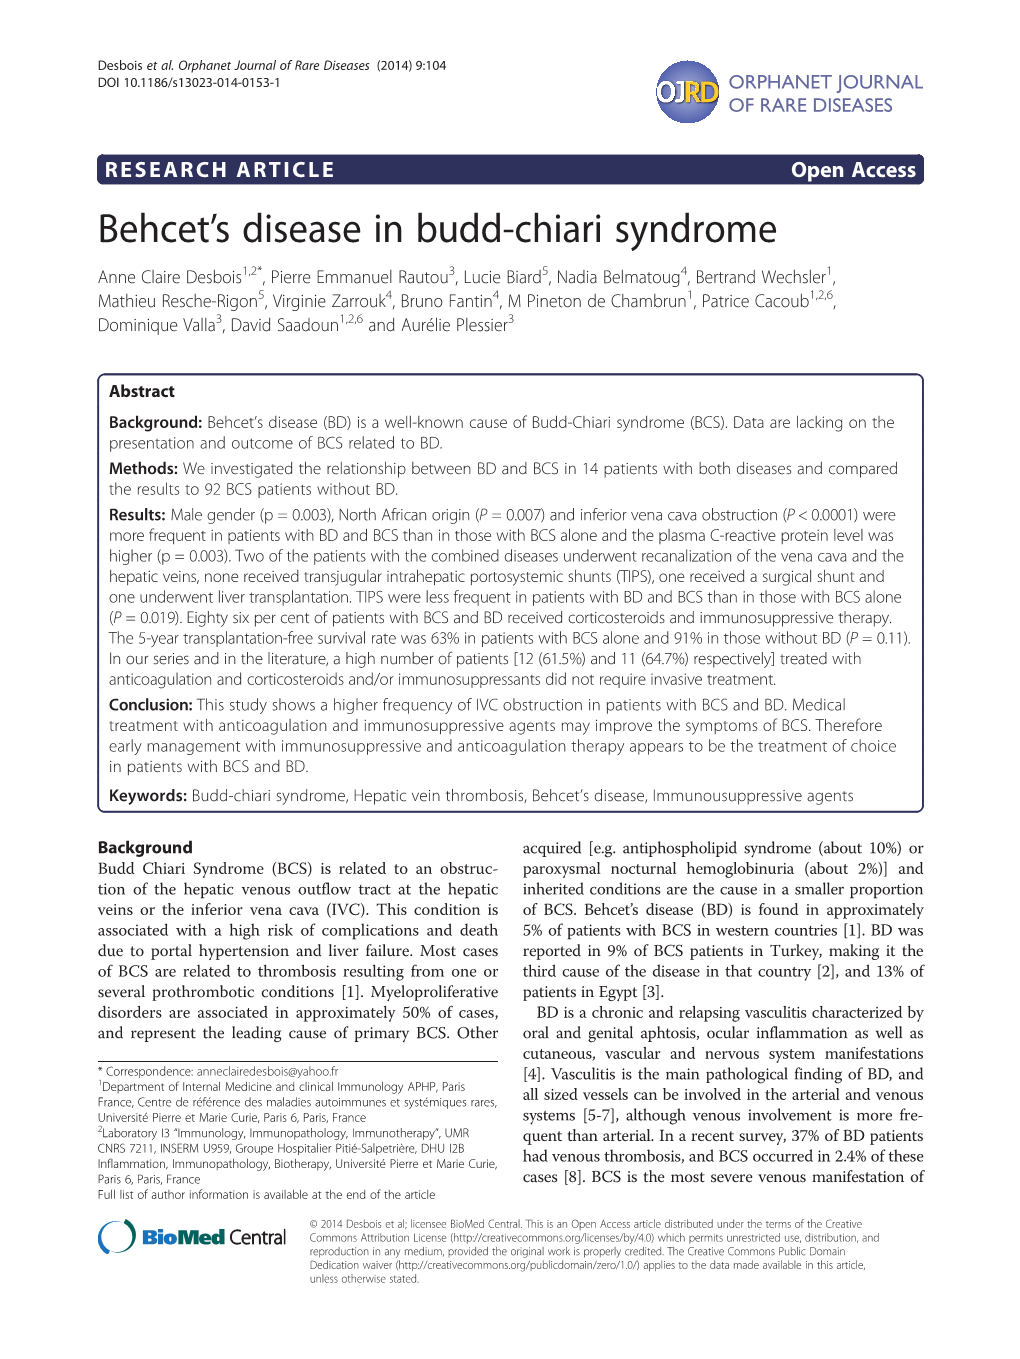 Behcet's Disease in Budd-Chiari Syndrome